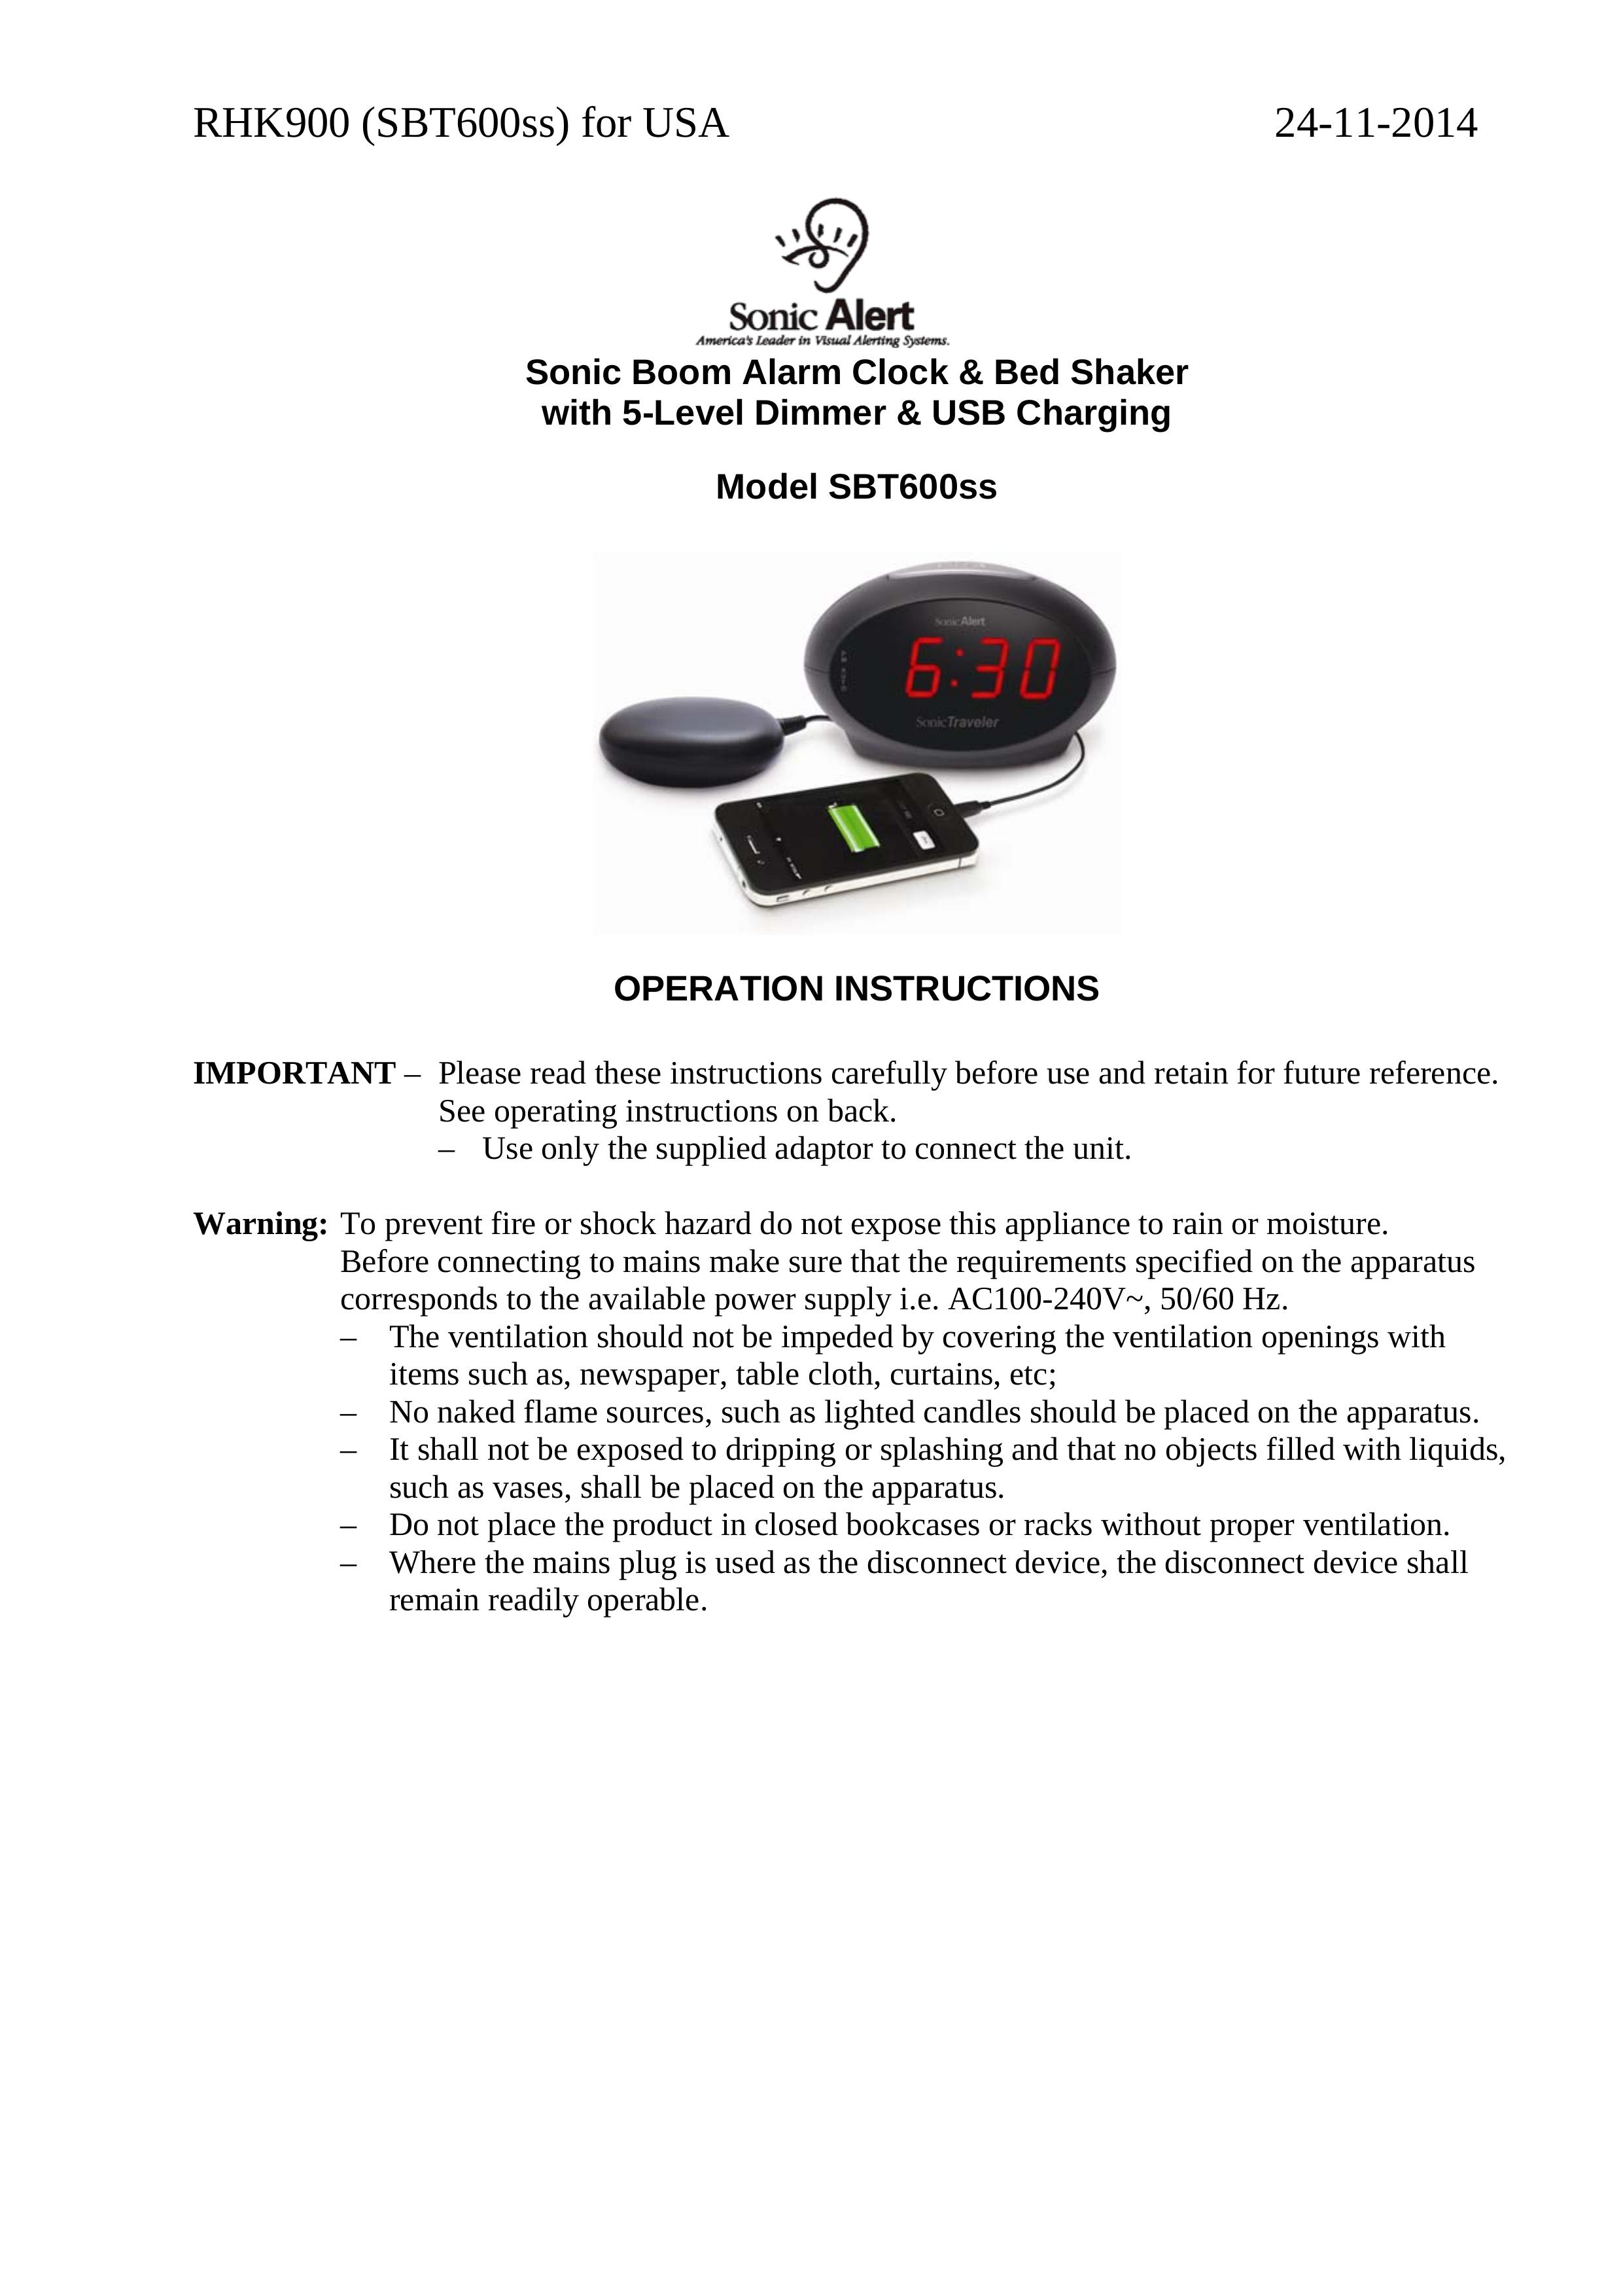 Sonic Alert SBT600ss Clock Radio User Manual